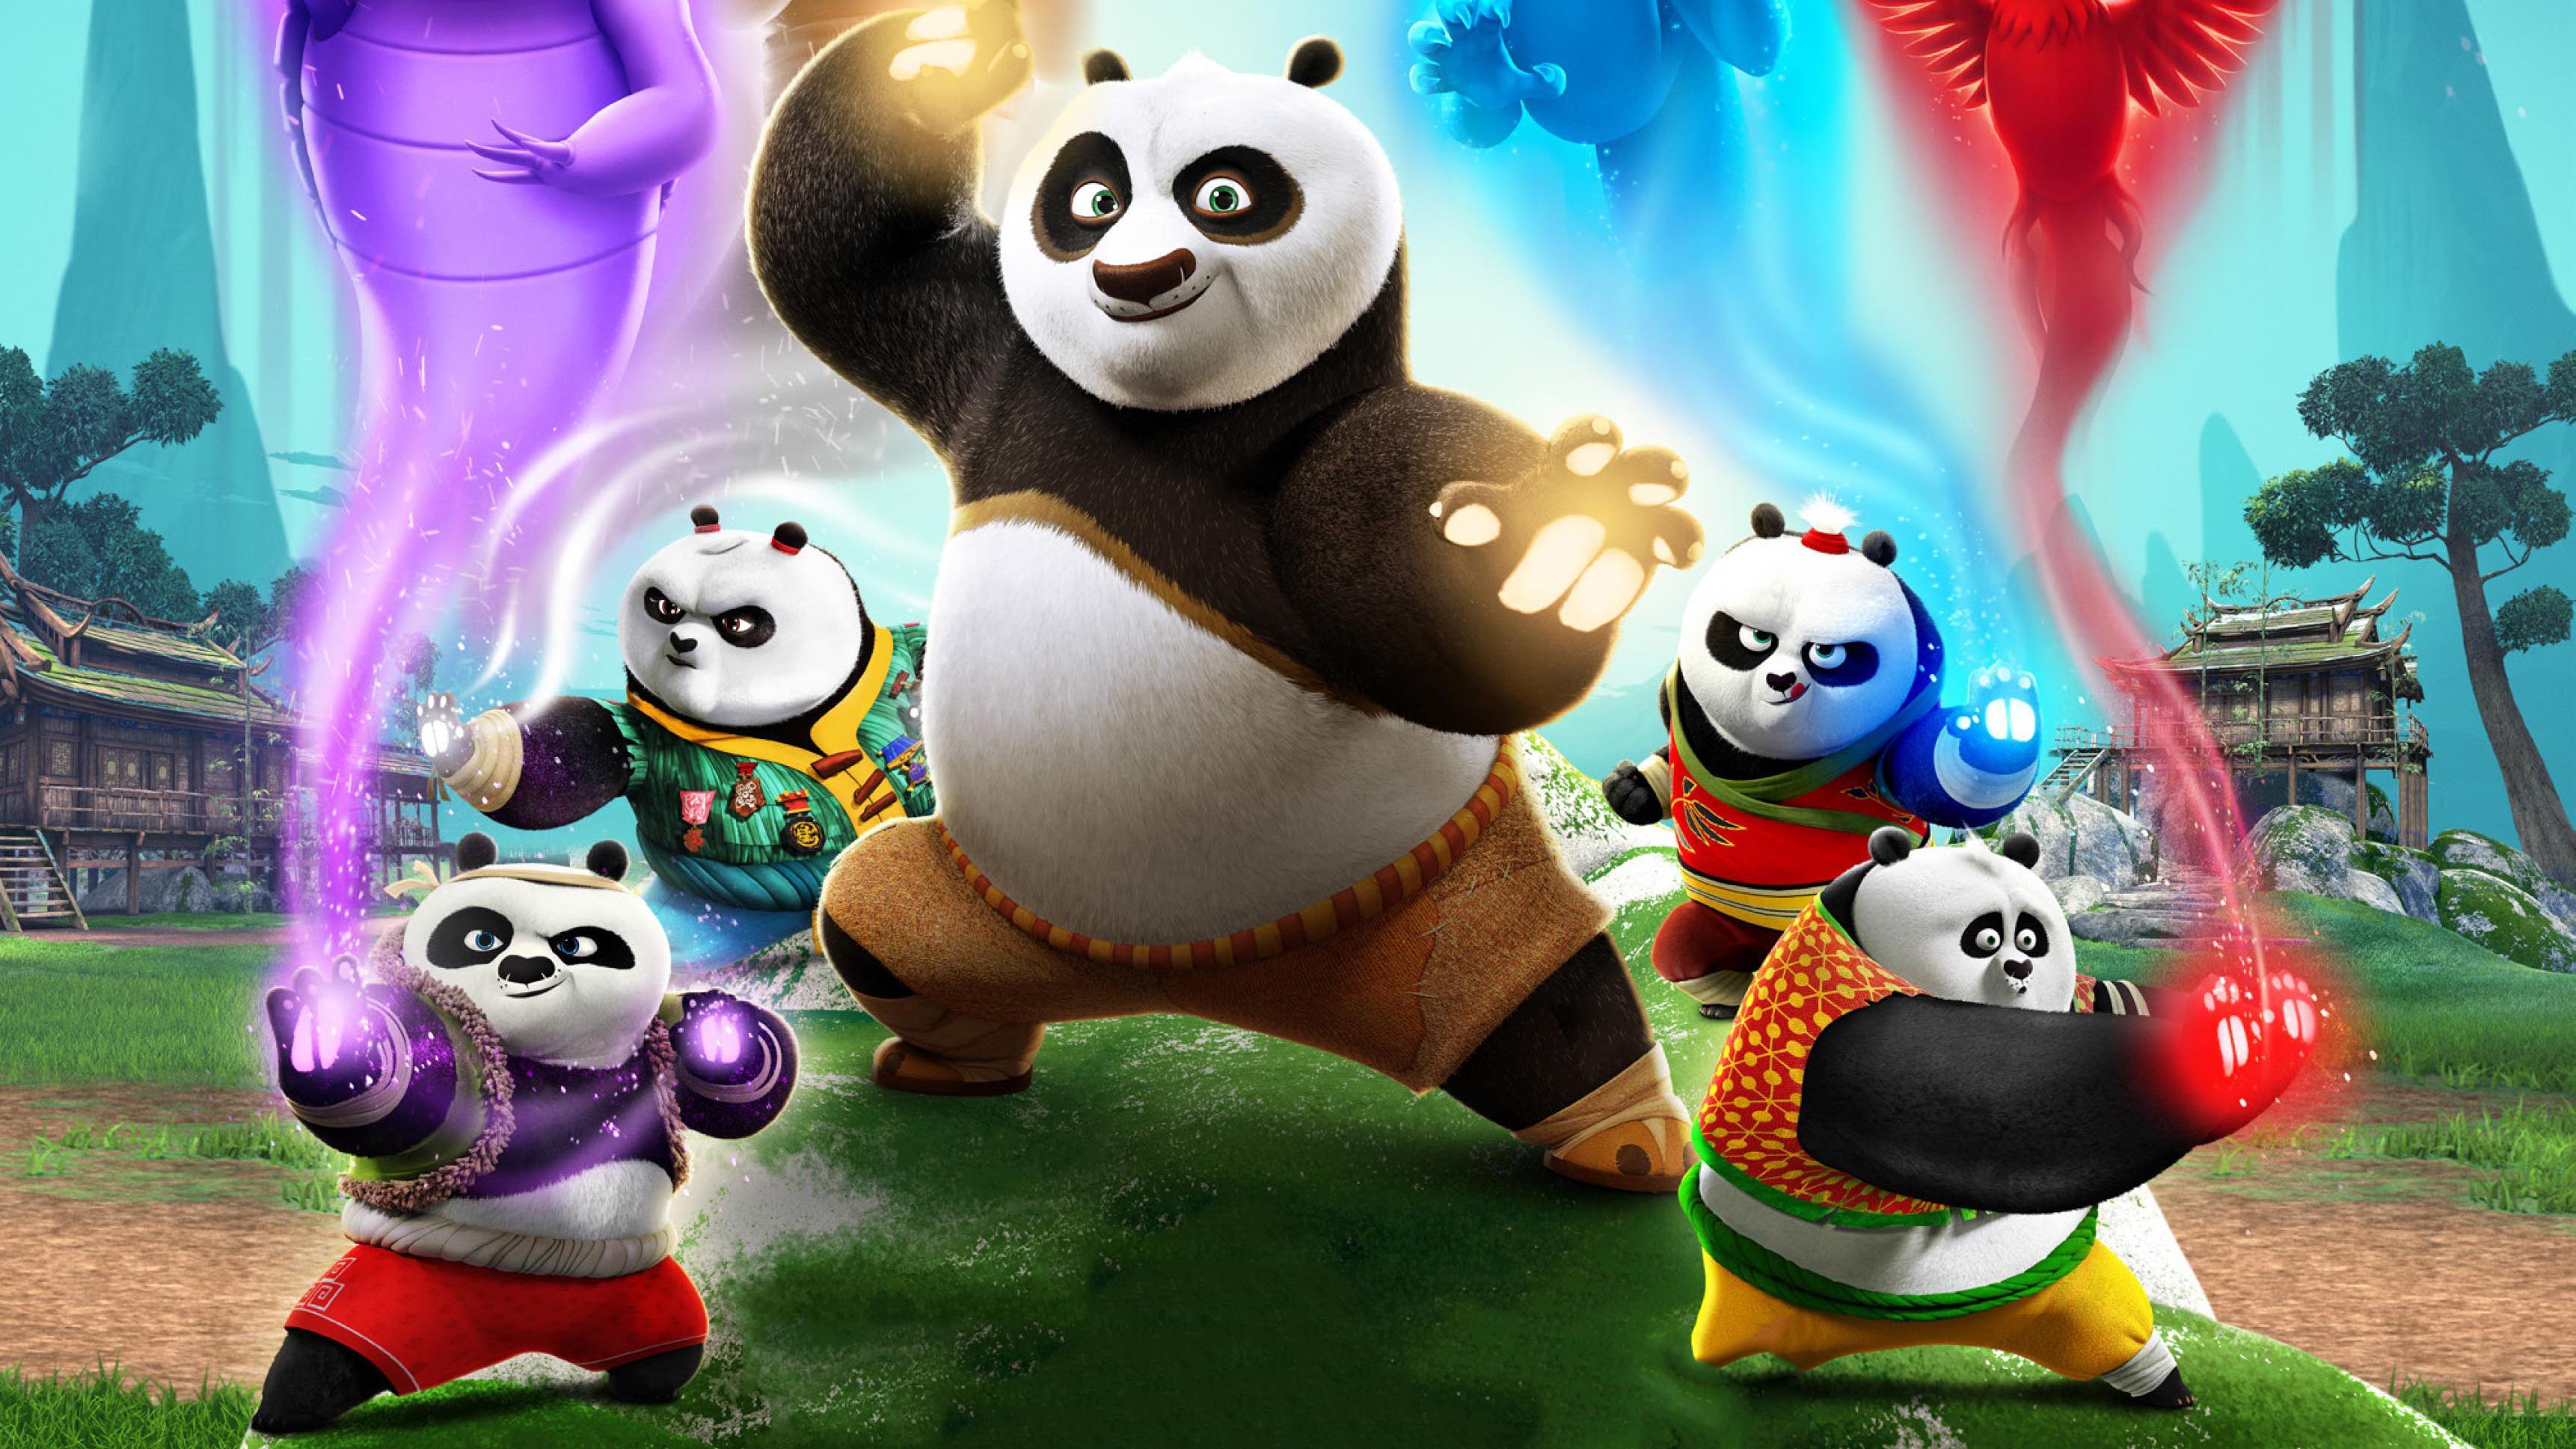 kufu panda video in bemba download